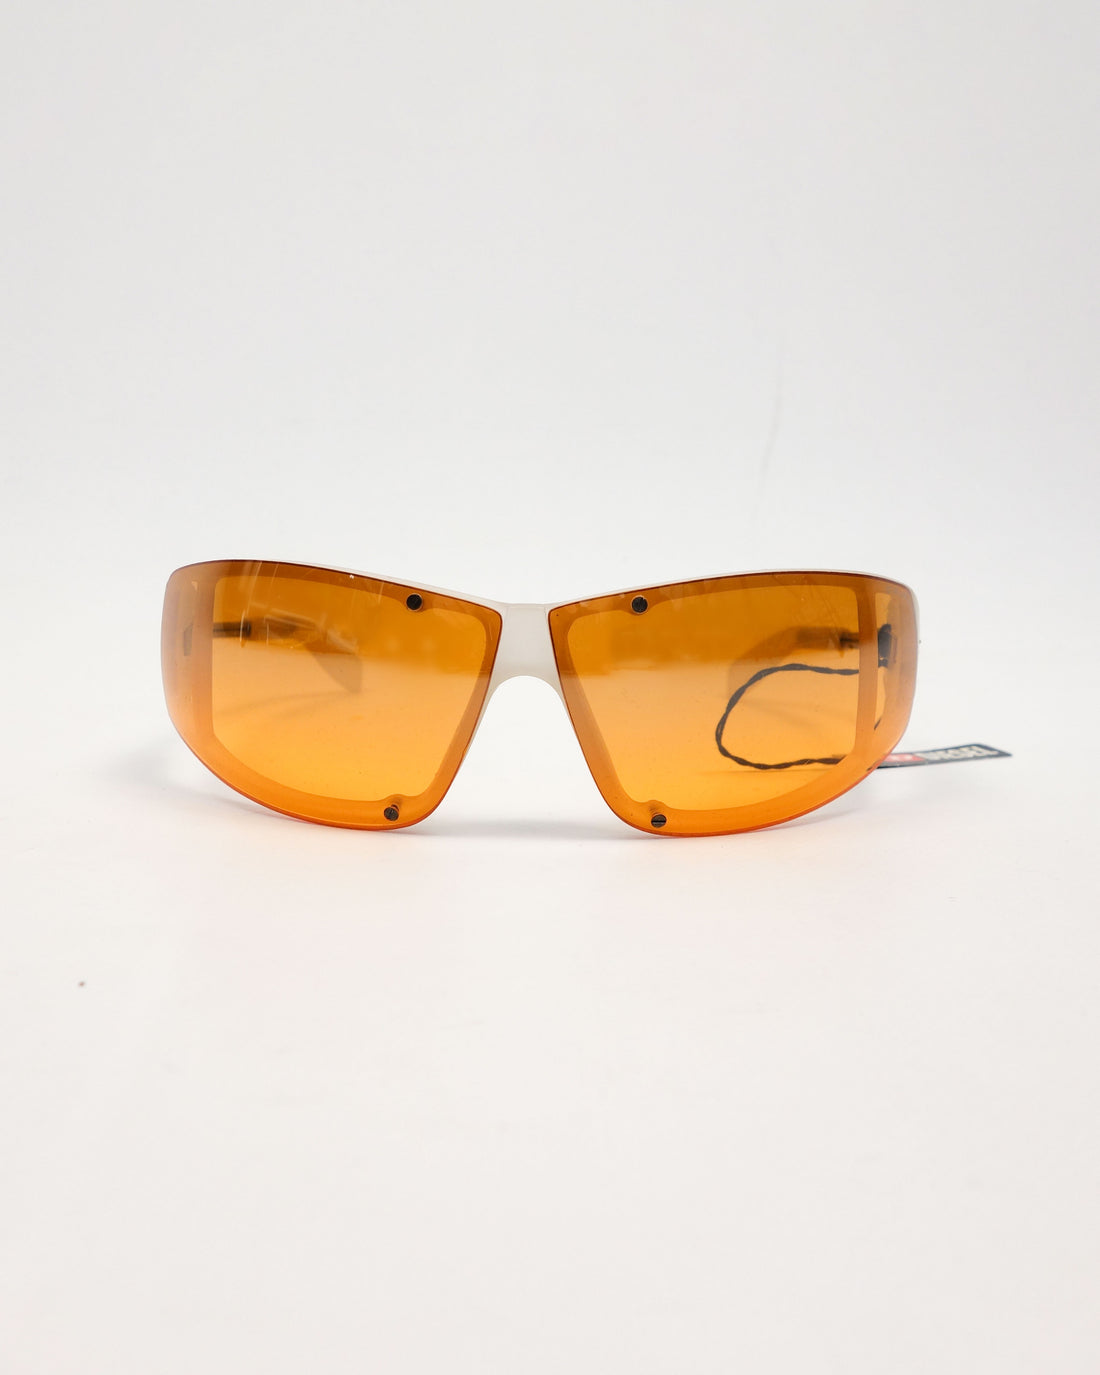 Diesel Jambo Orange Sunglasses 2000's